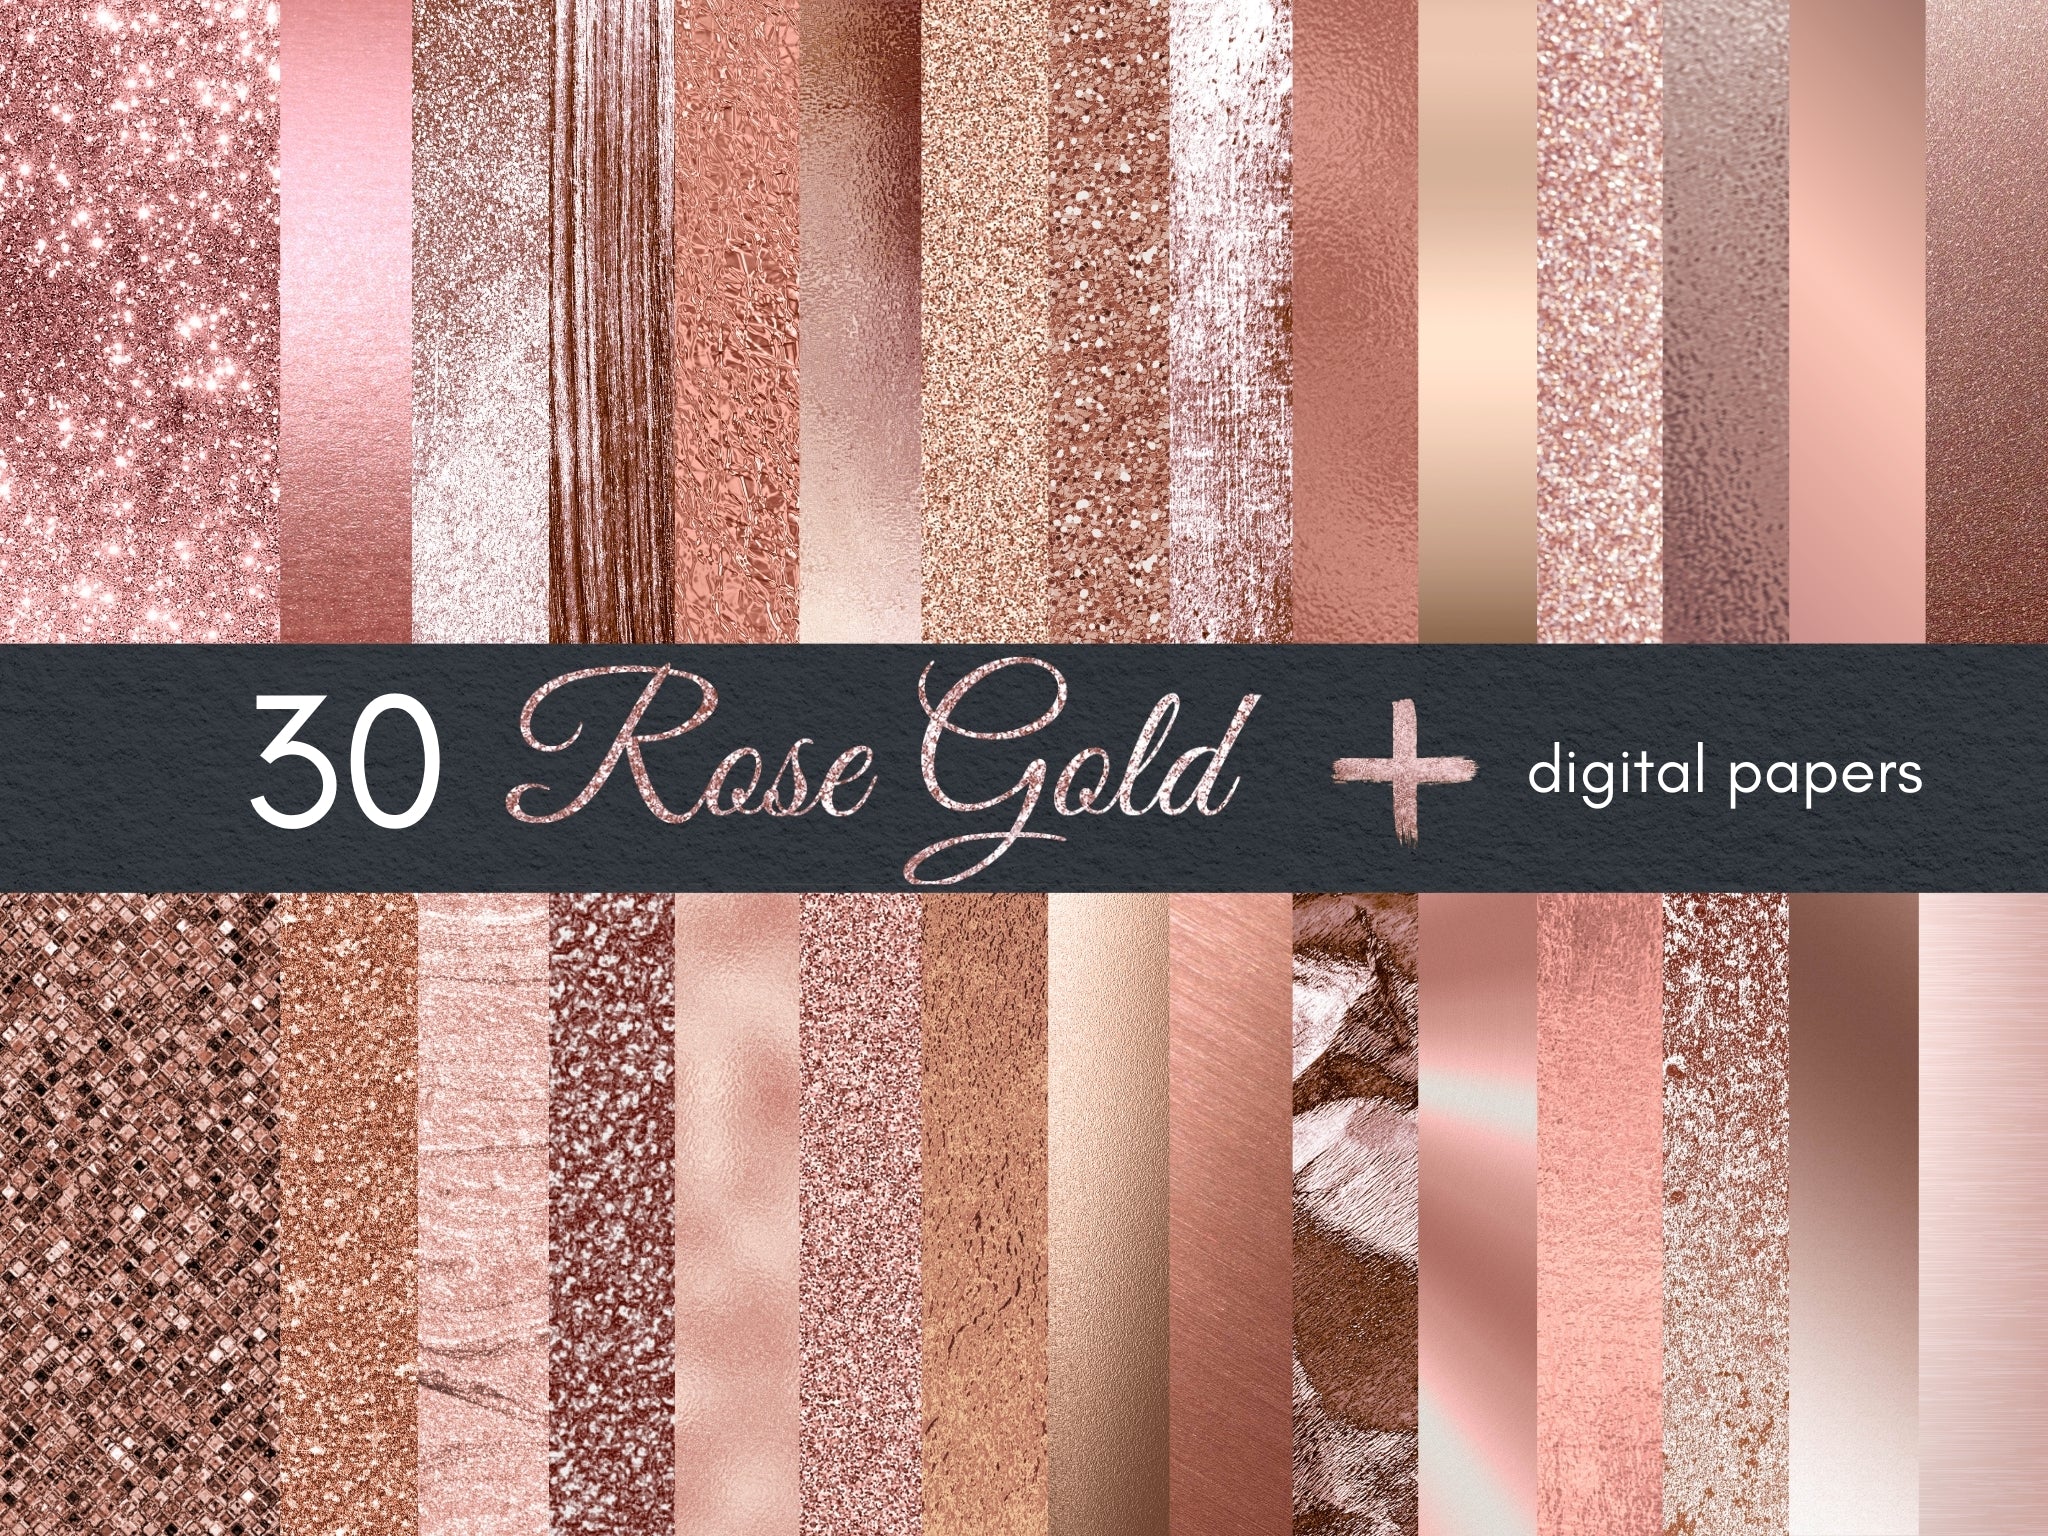 rose gold texture